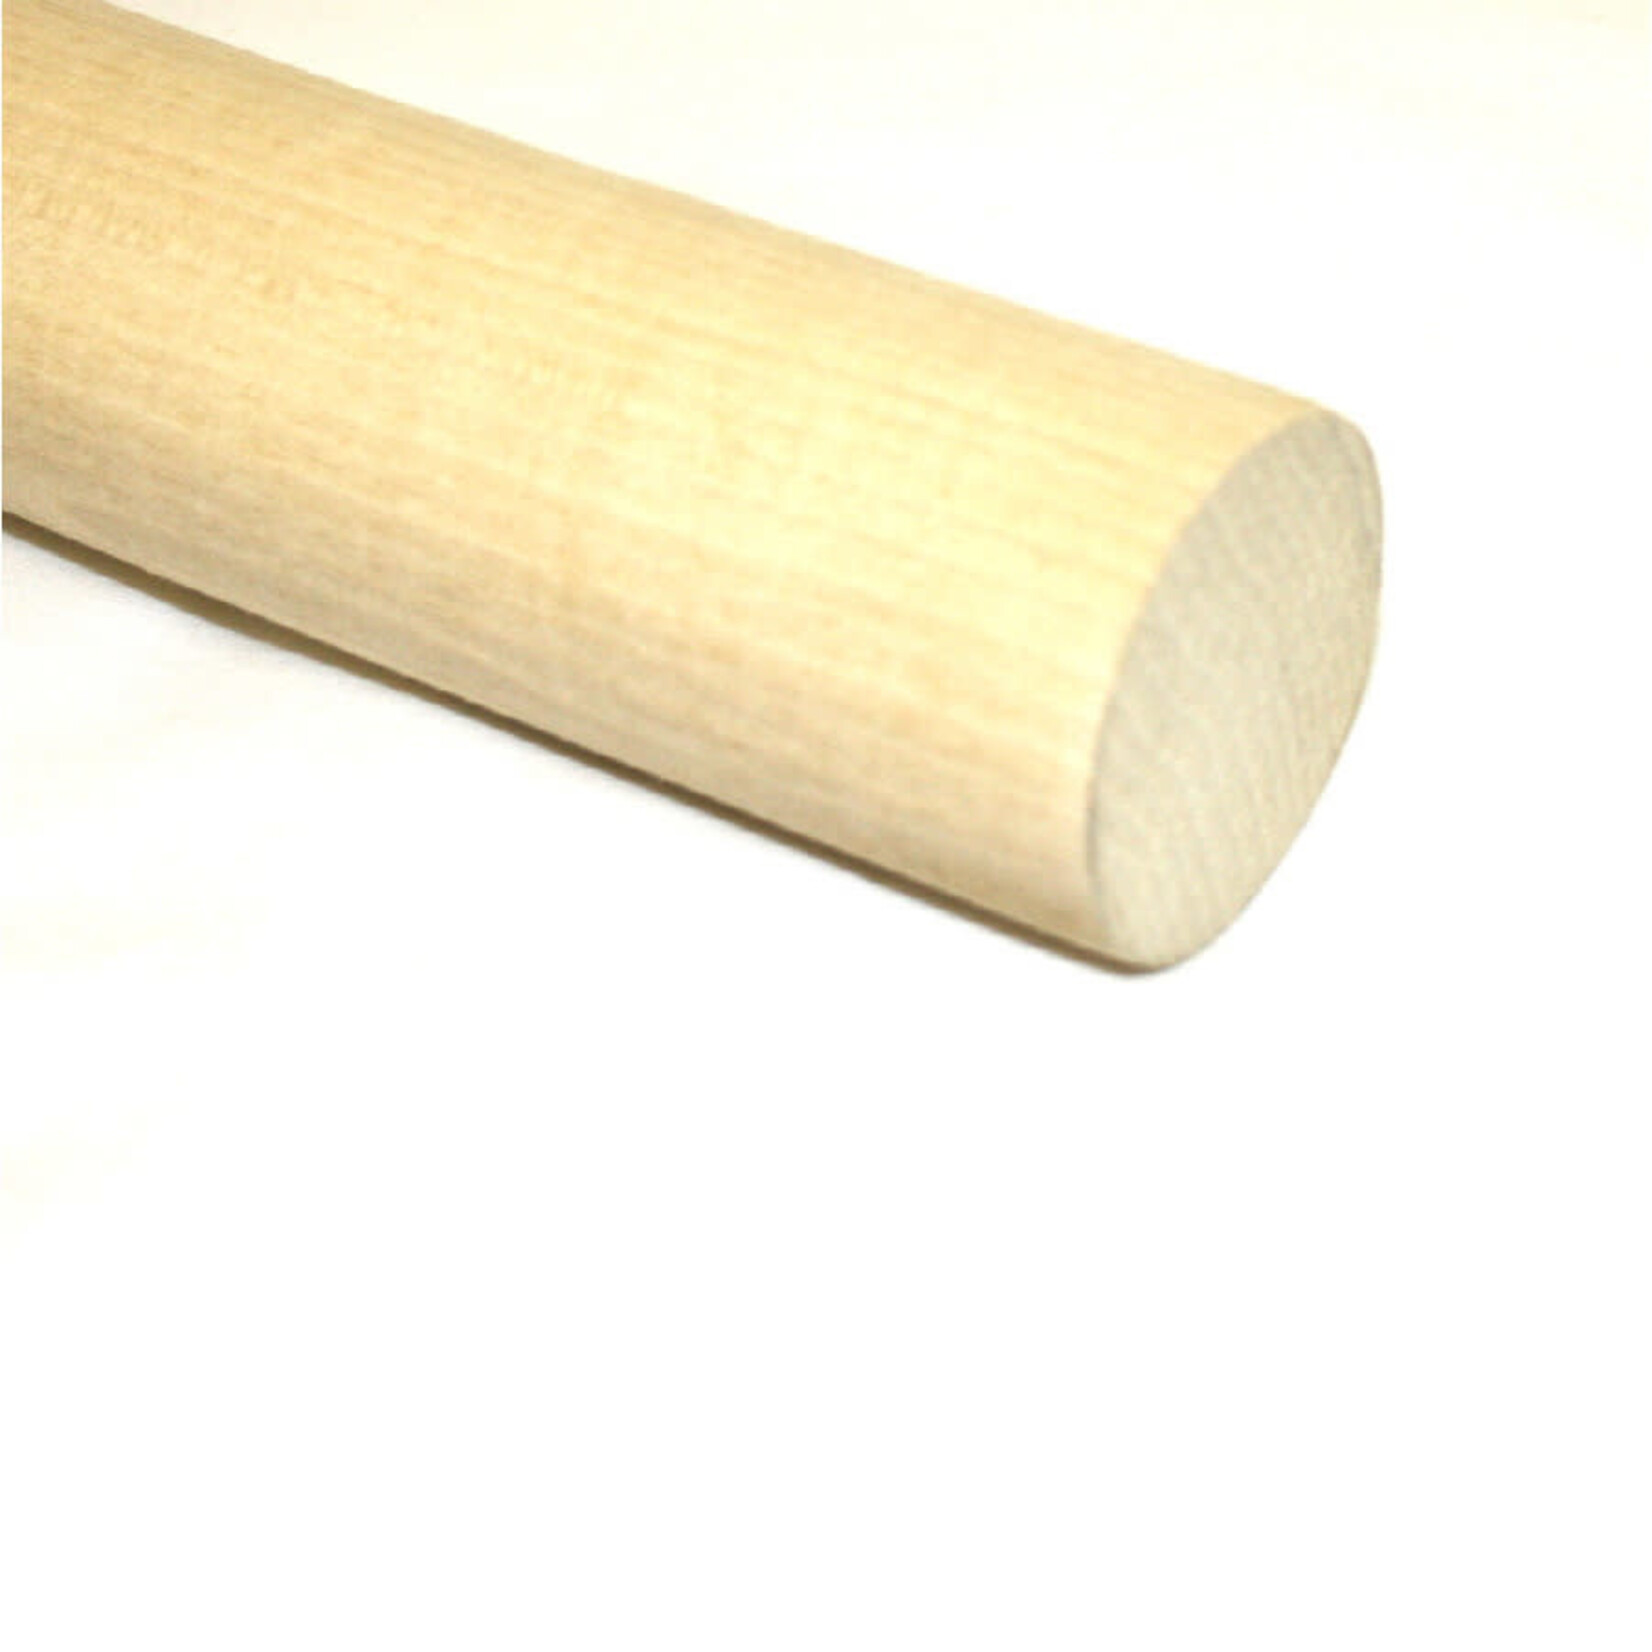 Wooden Dowel Stick 4 feet White 1/2 Inch